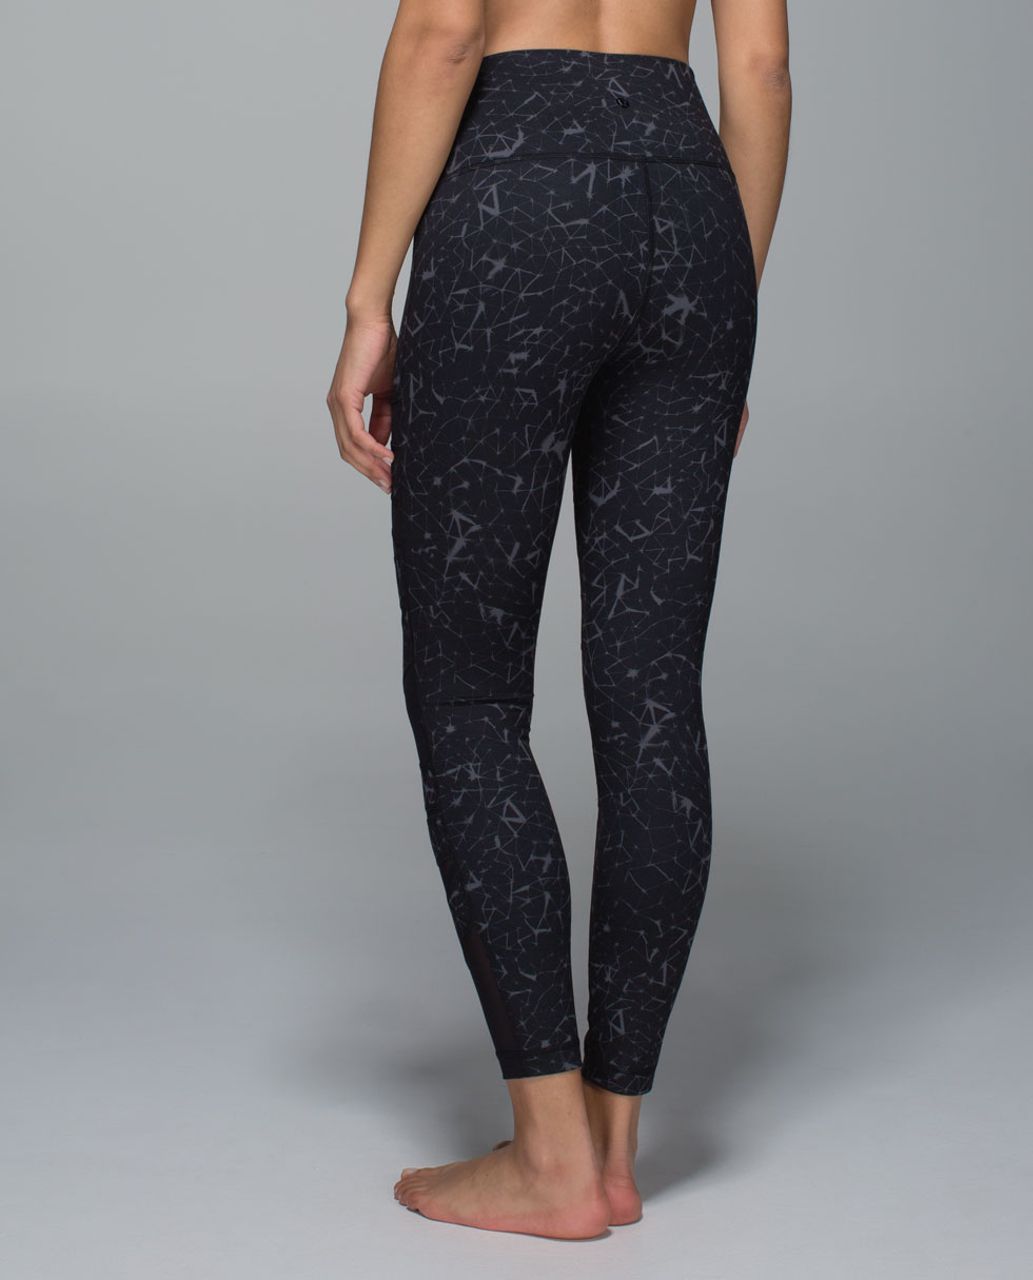 Lululemon High Times Pant size 2 Luon Pique Dark Slate Black NWT Gray Yoga  Pants